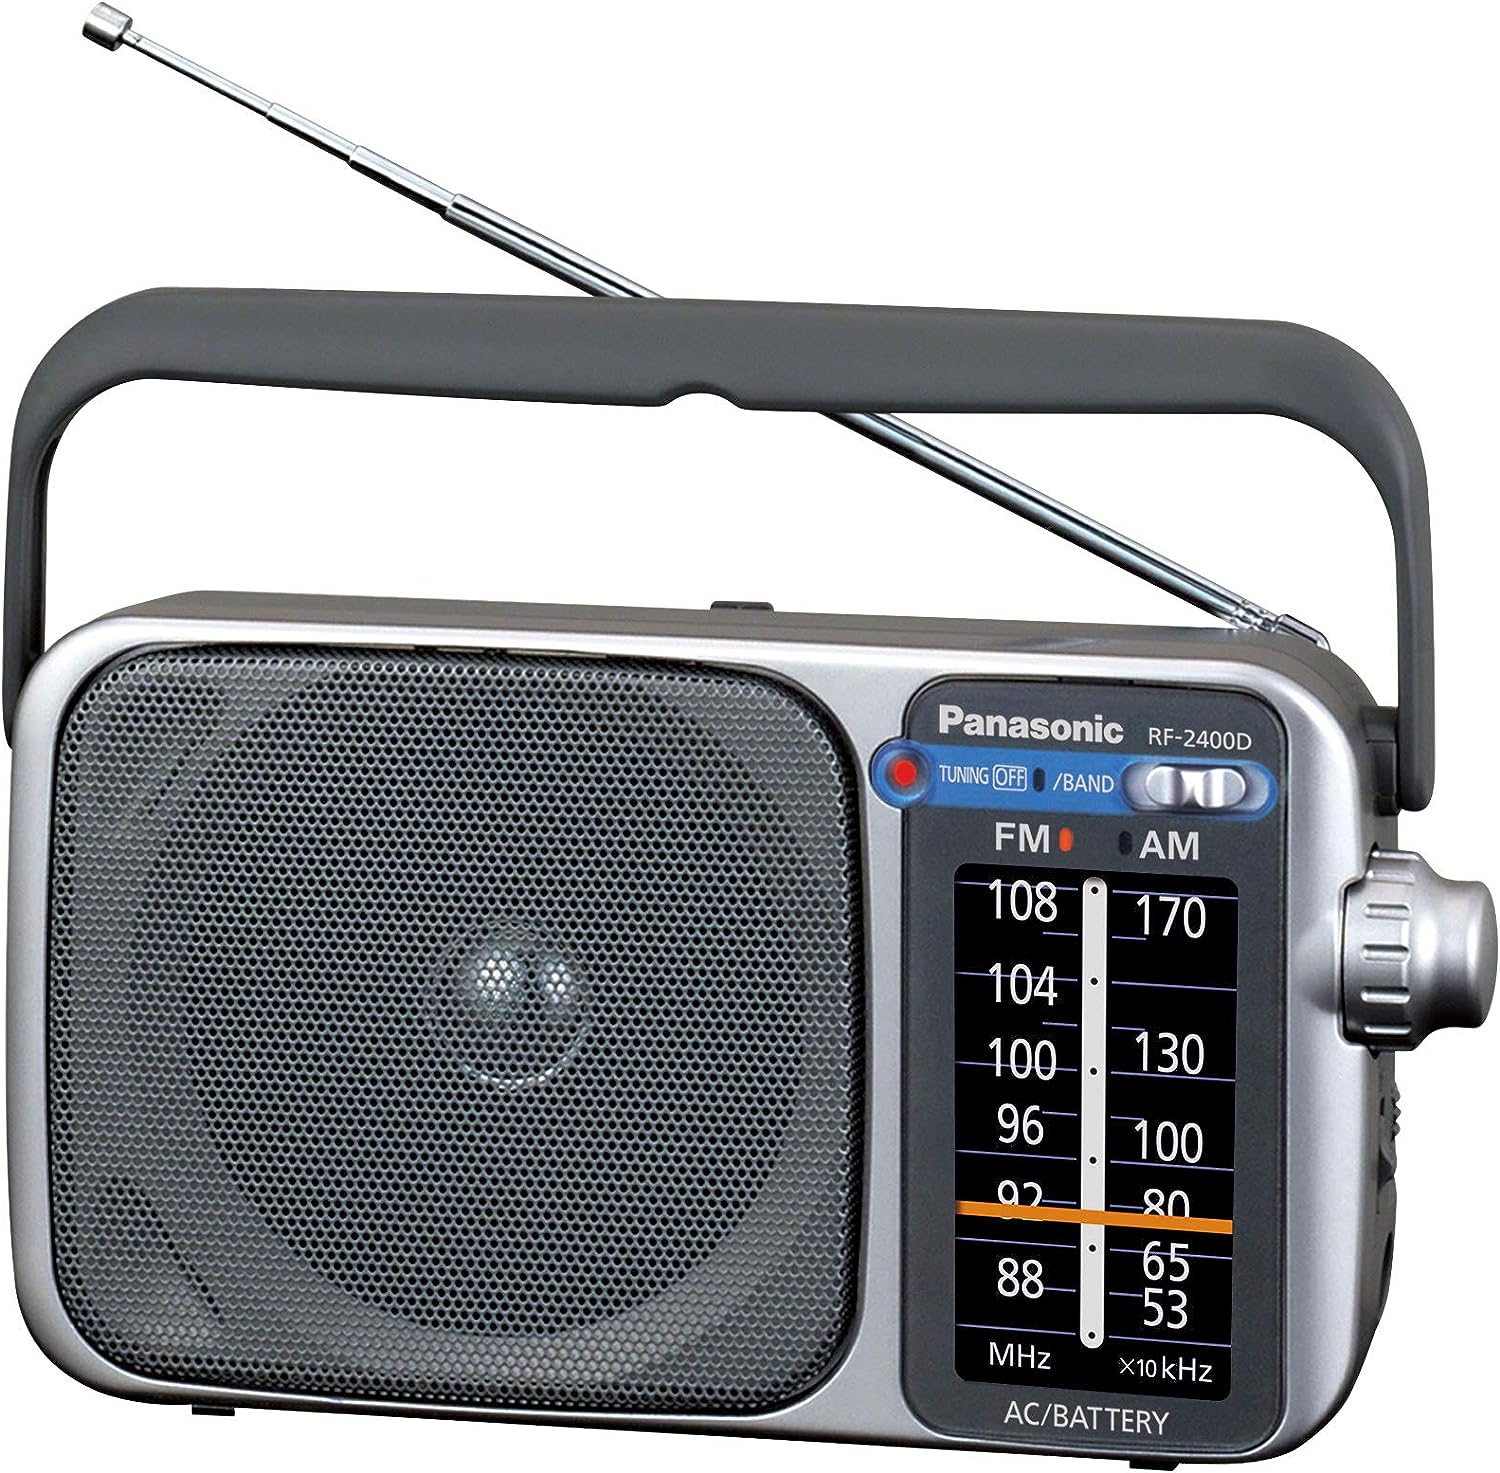 Panasonic Portable AM / FM Radio, Battery Operated [...]